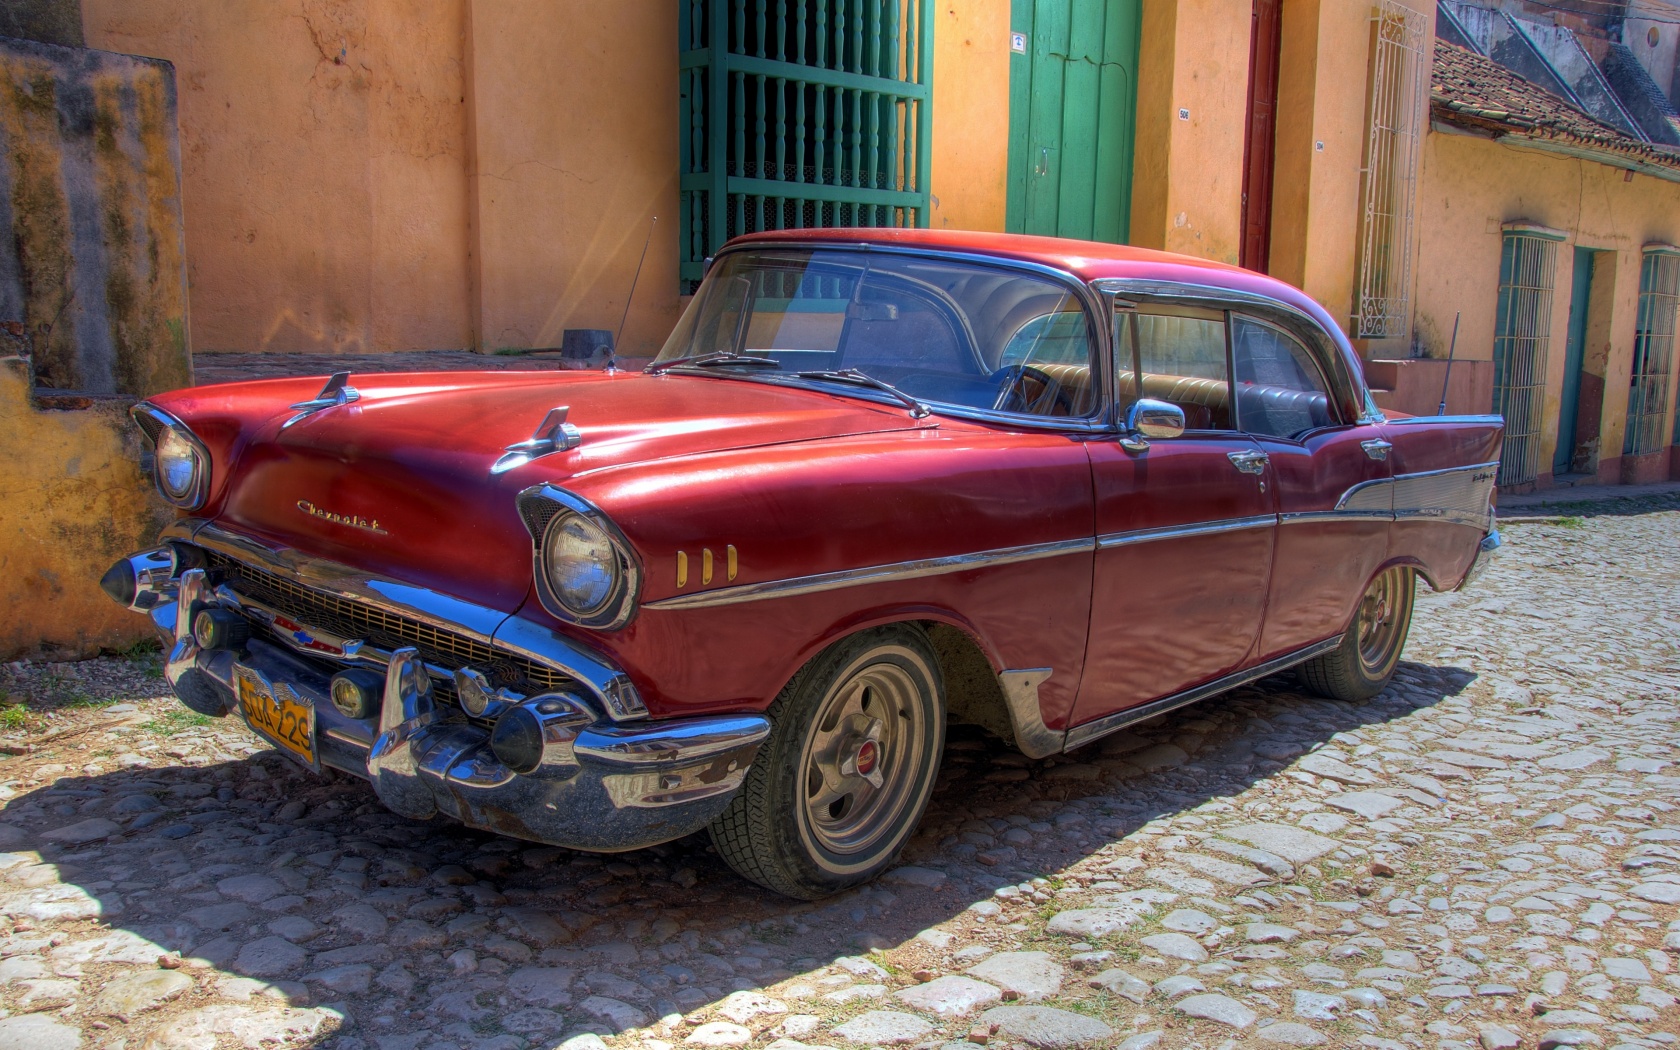 Chevrolet Retro Car - Cuba Havana